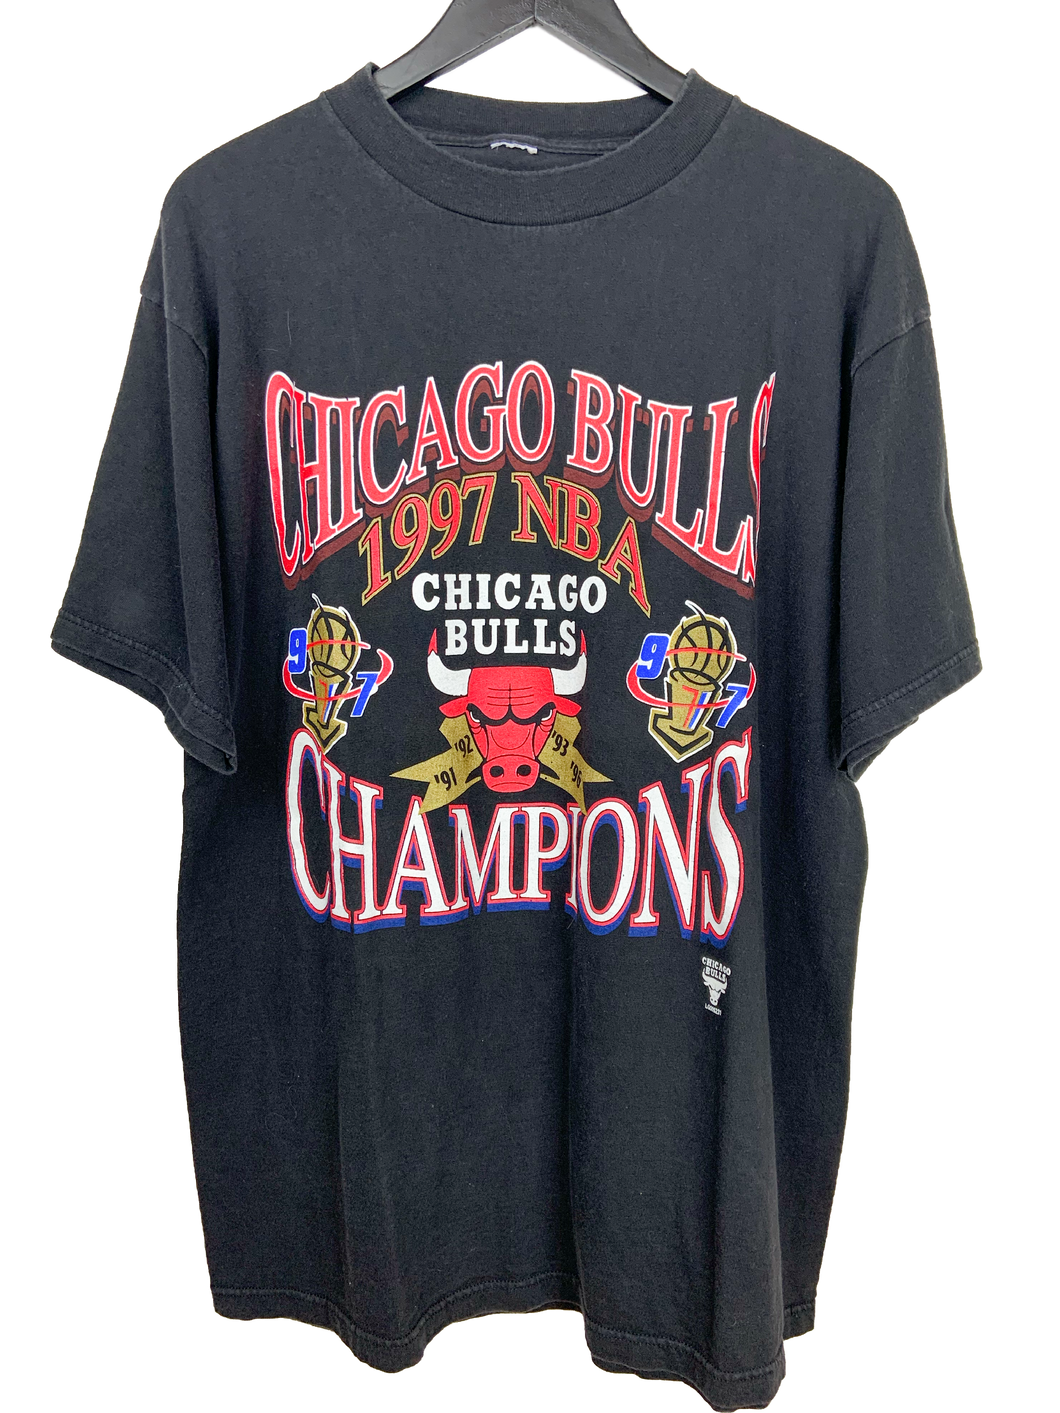 1997 CHICAGO BULLS CHAMPIONS TEE - LARGE